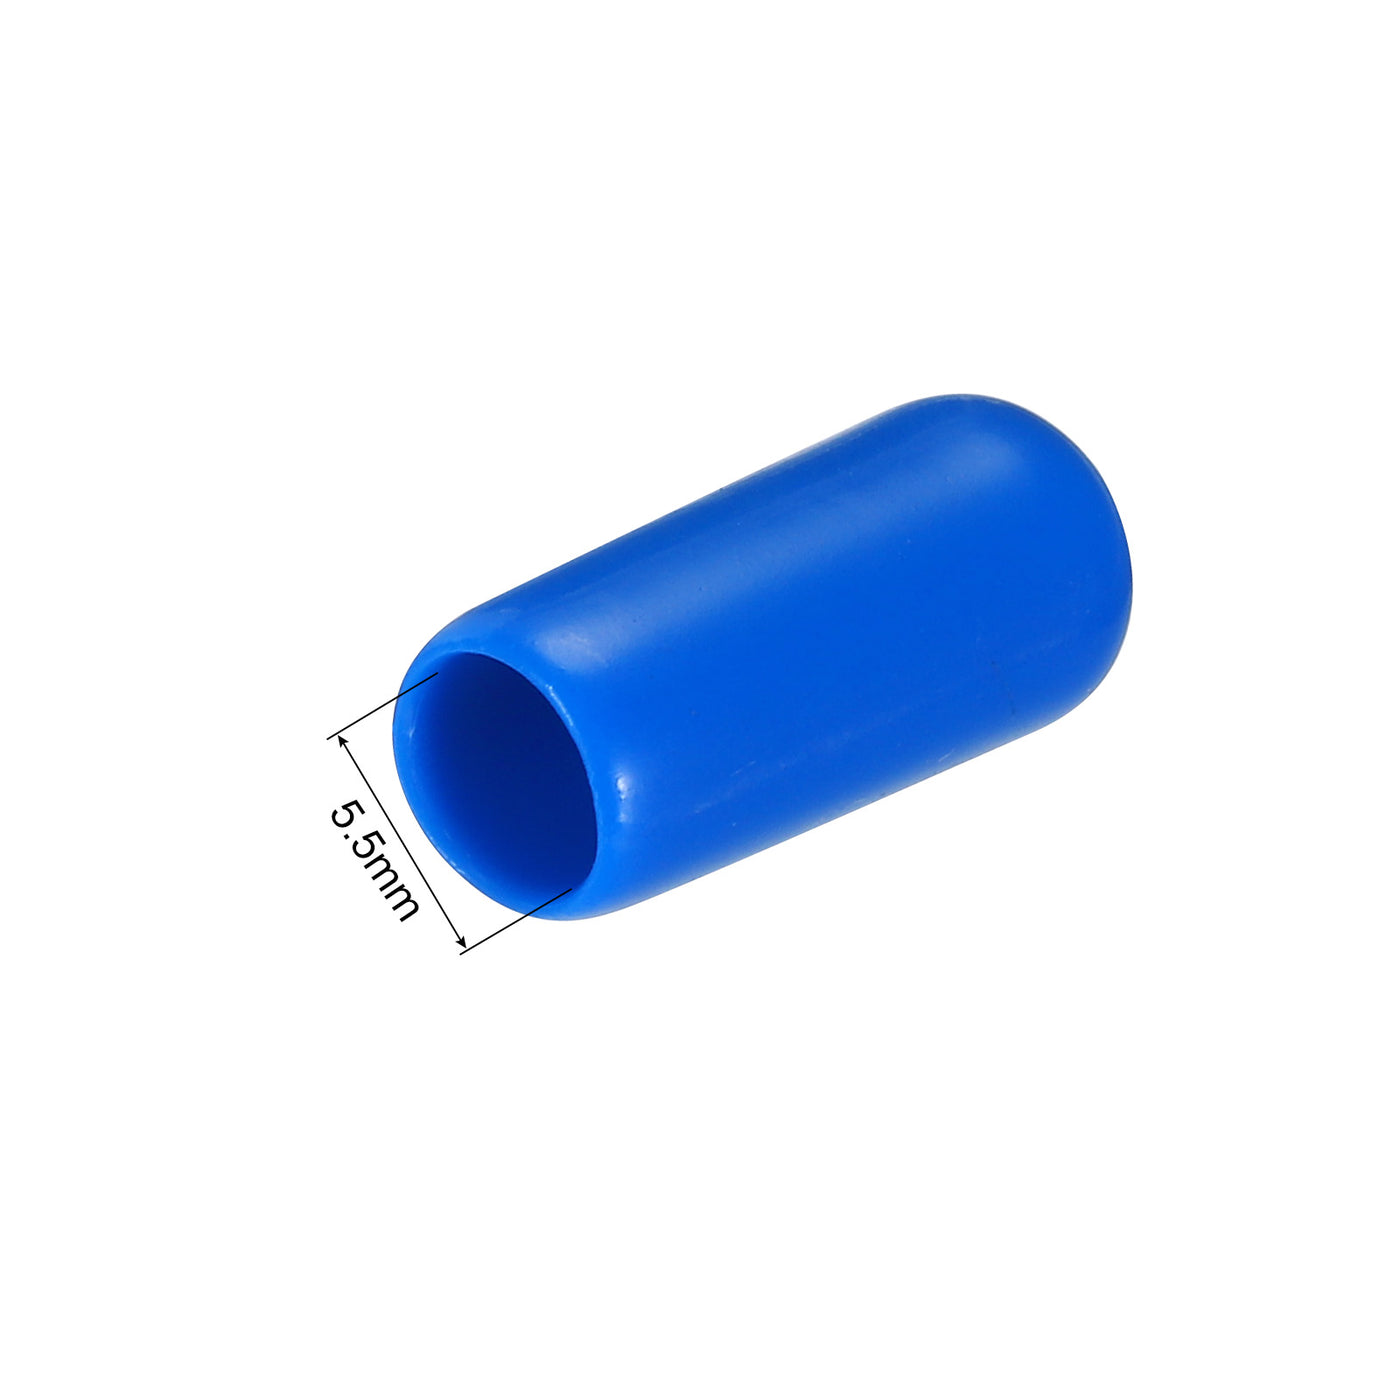 uxcell Uxcell 100pcs Rubber End Caps 5.5mm ID Vinyl PVC Round Tube Bolt Cap Cover Screw Thread Protectors Blue